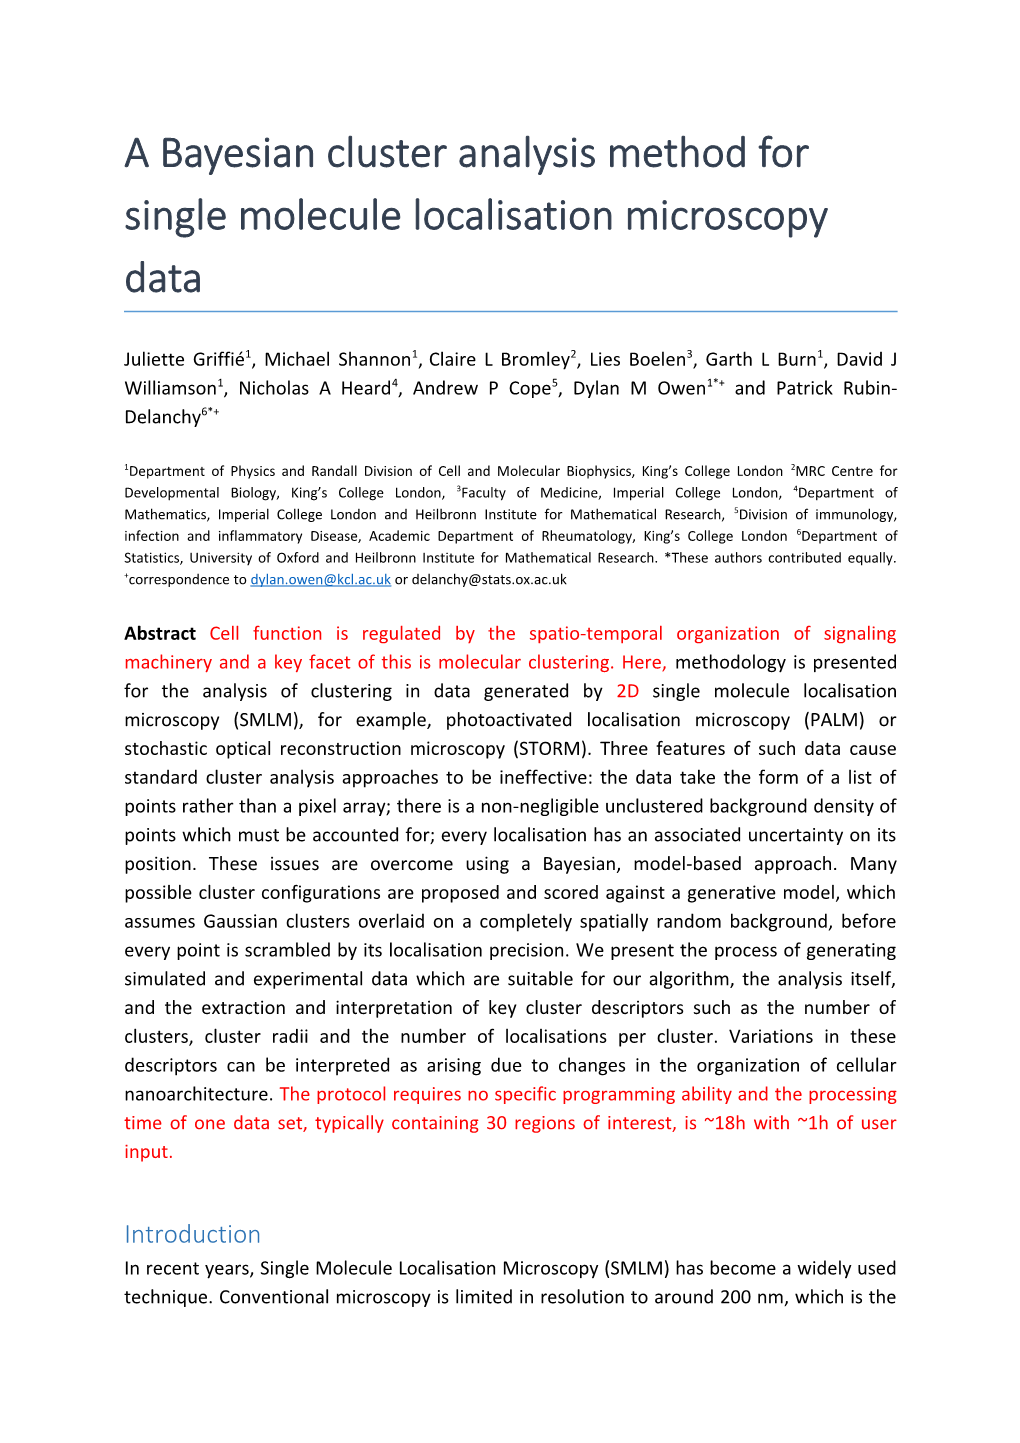 A Bayesian Cluster Analysis Method for Single Molecule Localisation Microscopy Data